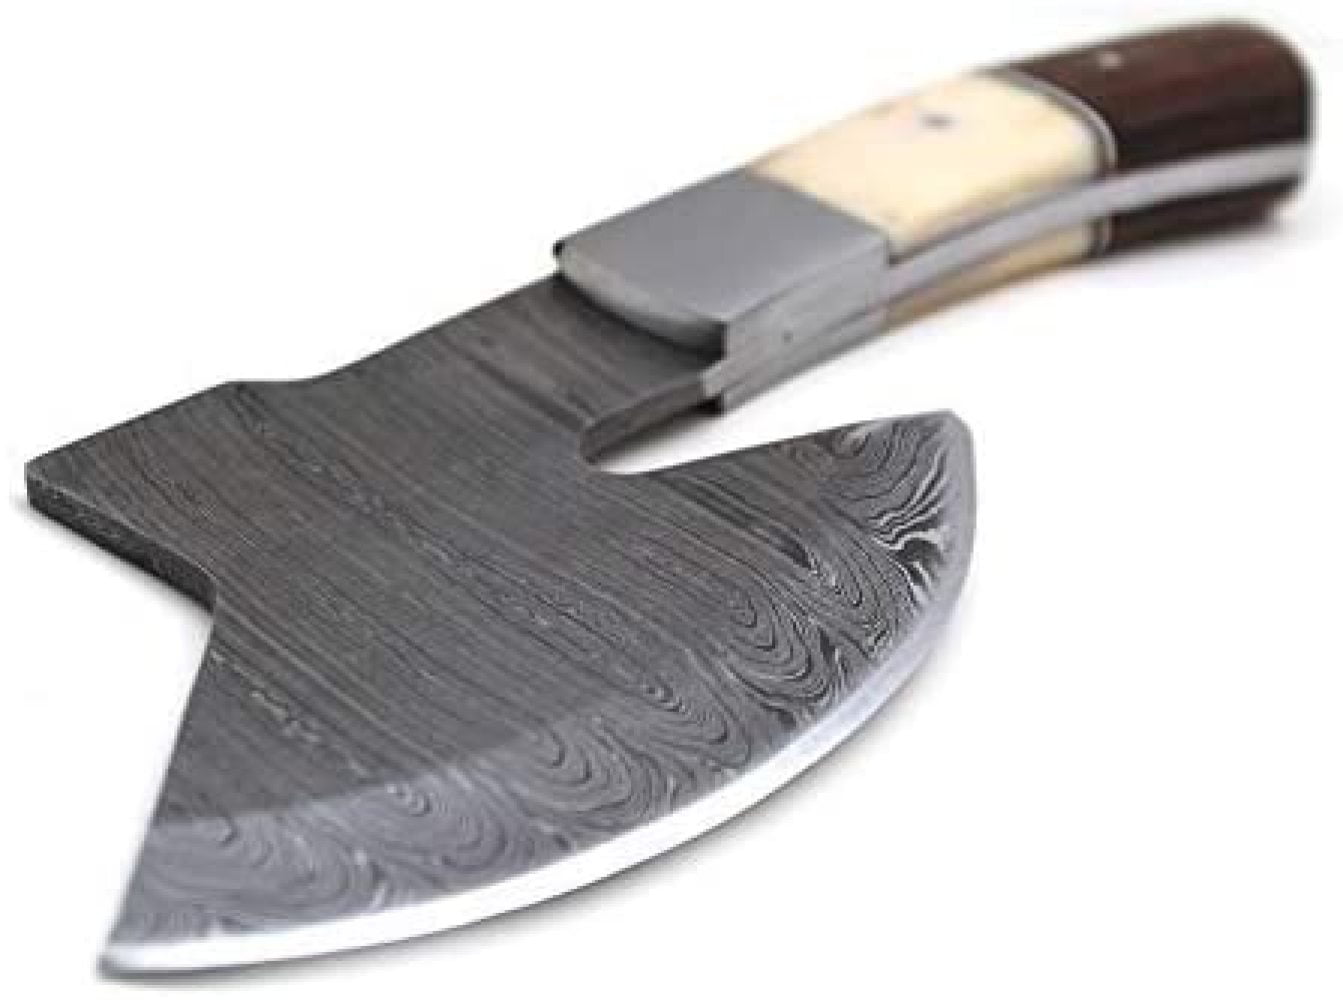 Wild Turkey Handmade Solid Damascus Steel Axe w/ Leather Sheath 